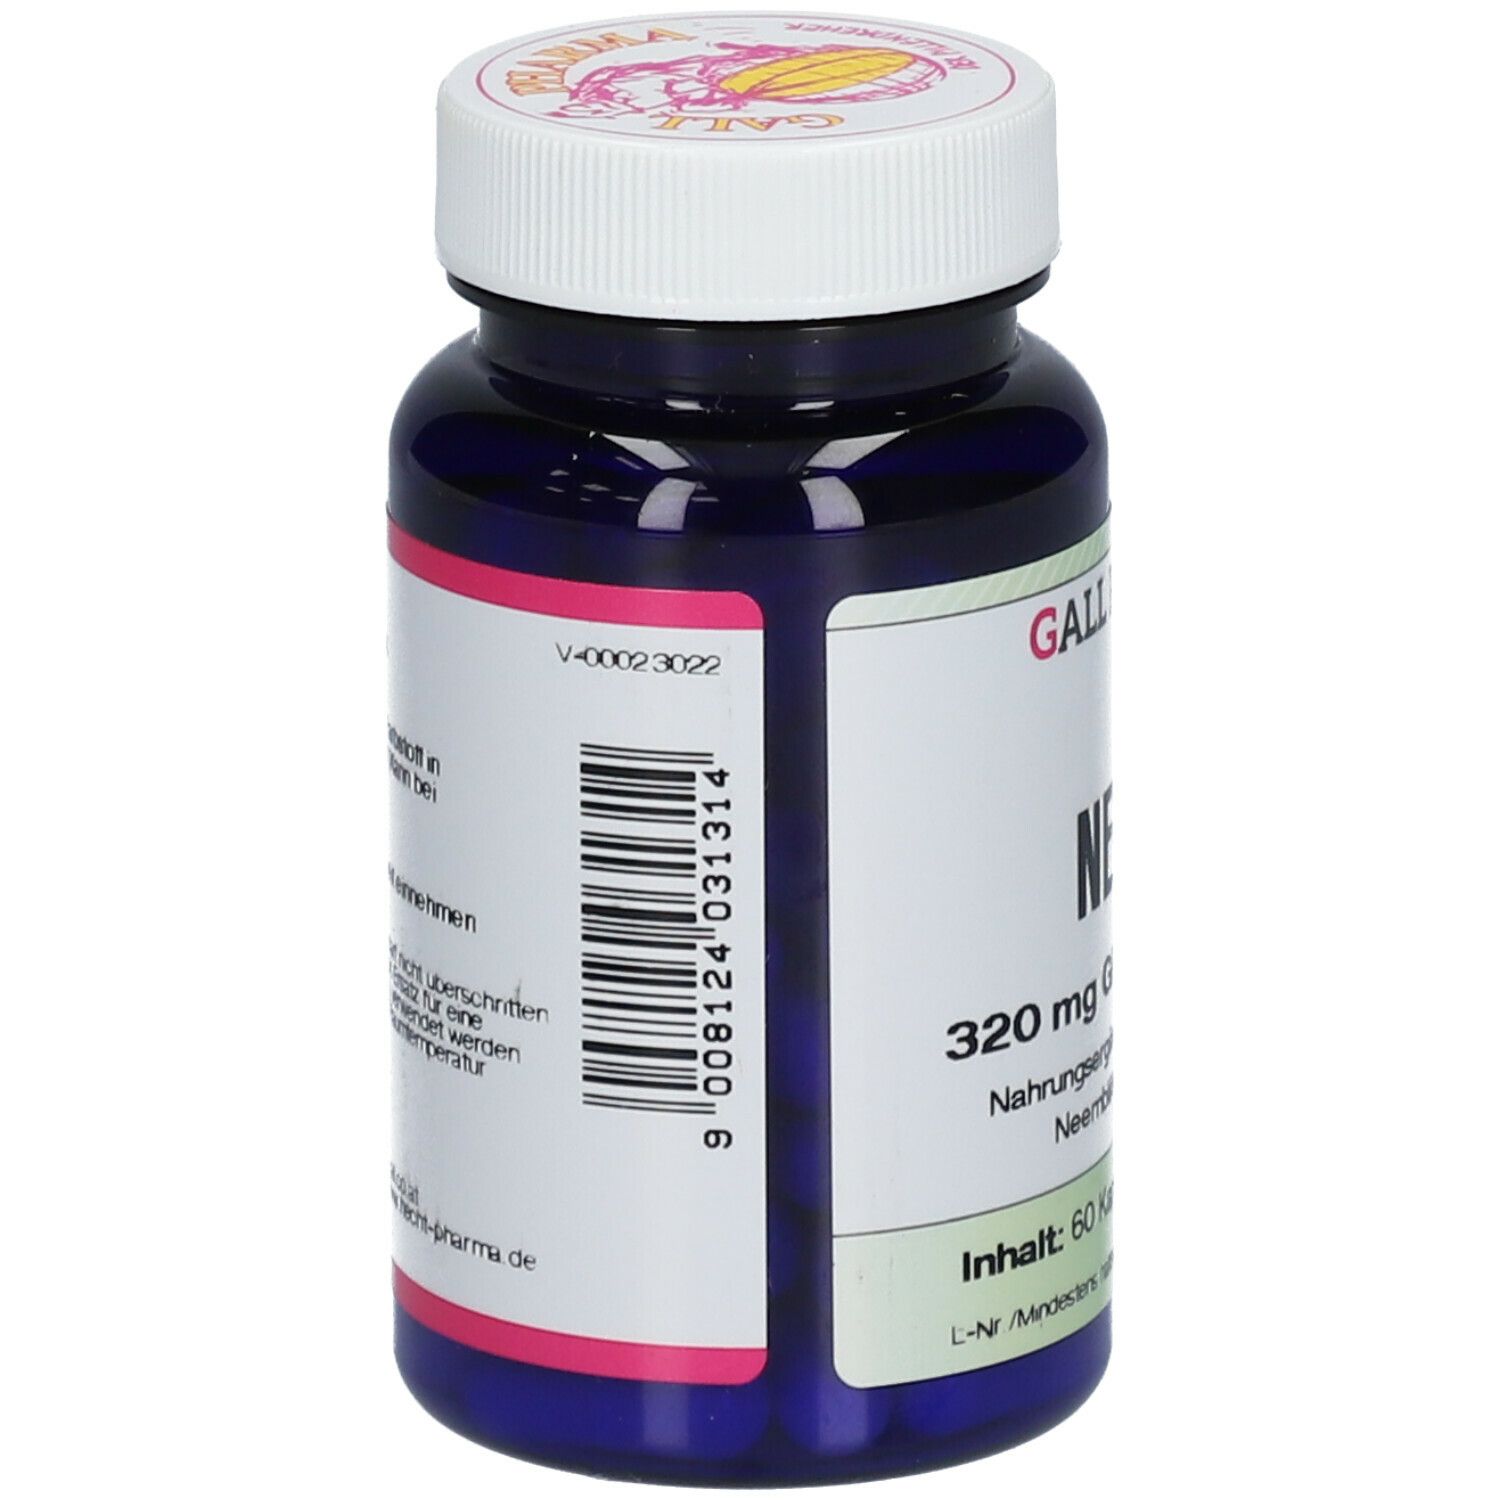 GALL PHARMA NEEM 320 mg GPH Kapseln